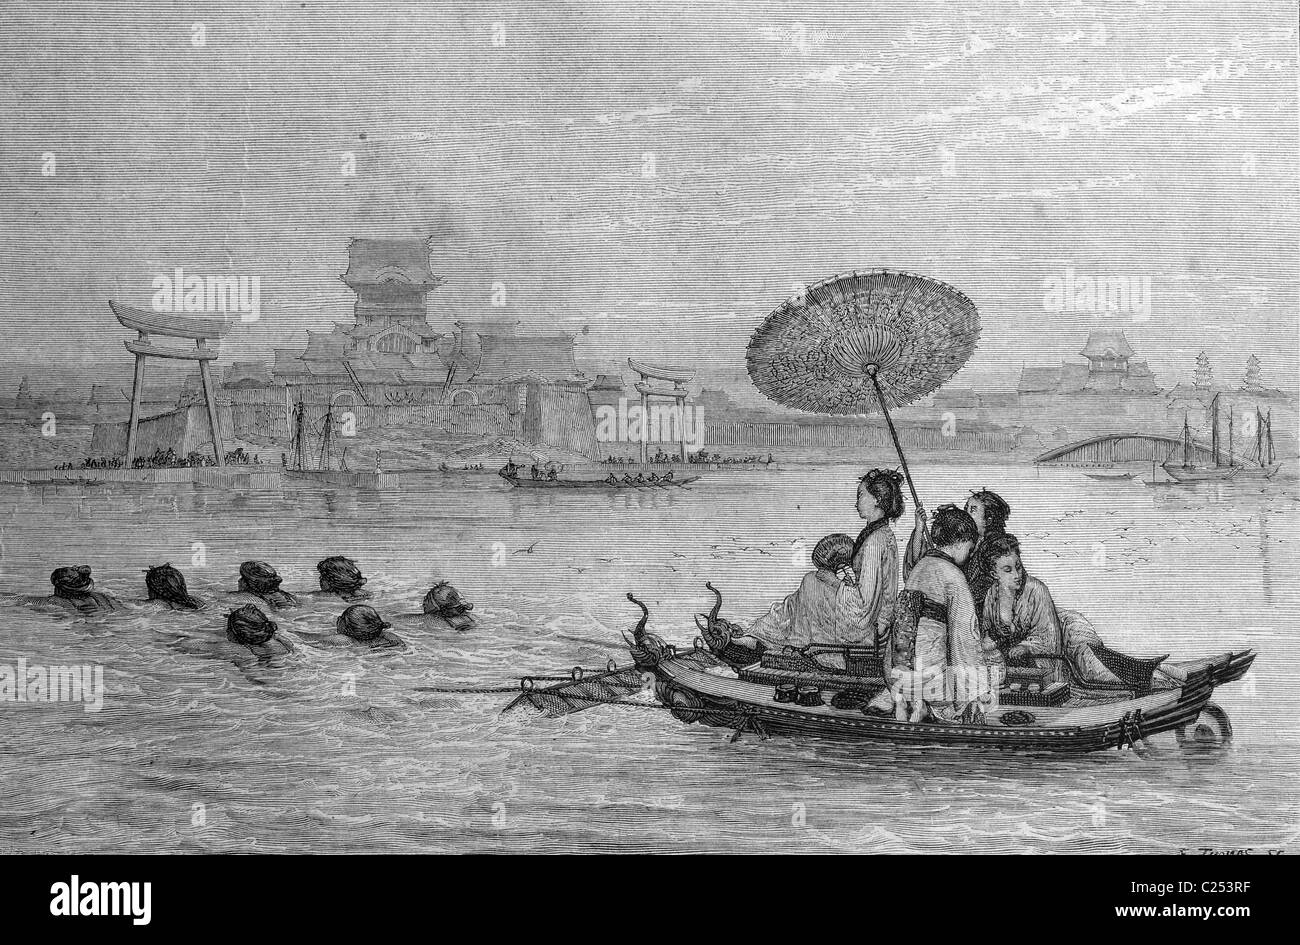 Japanese ferry, Japan, historic illustration, 1877 Stock Photo